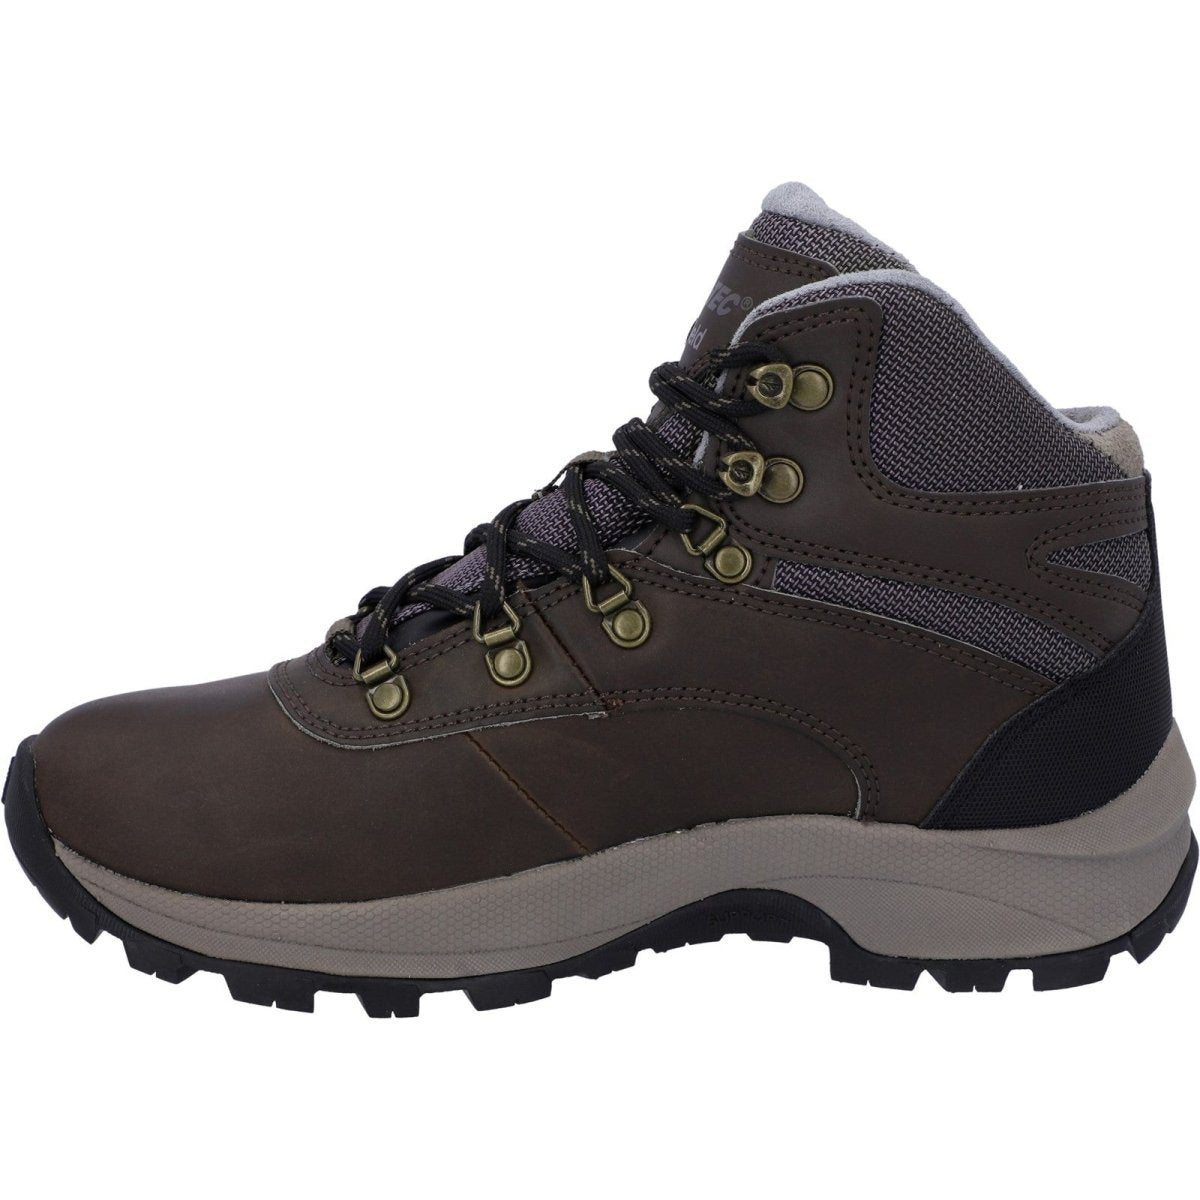 Hi-Tec Altitude VI Ladies Leather Waterproof Hiking Boots - Shoe Store Direct